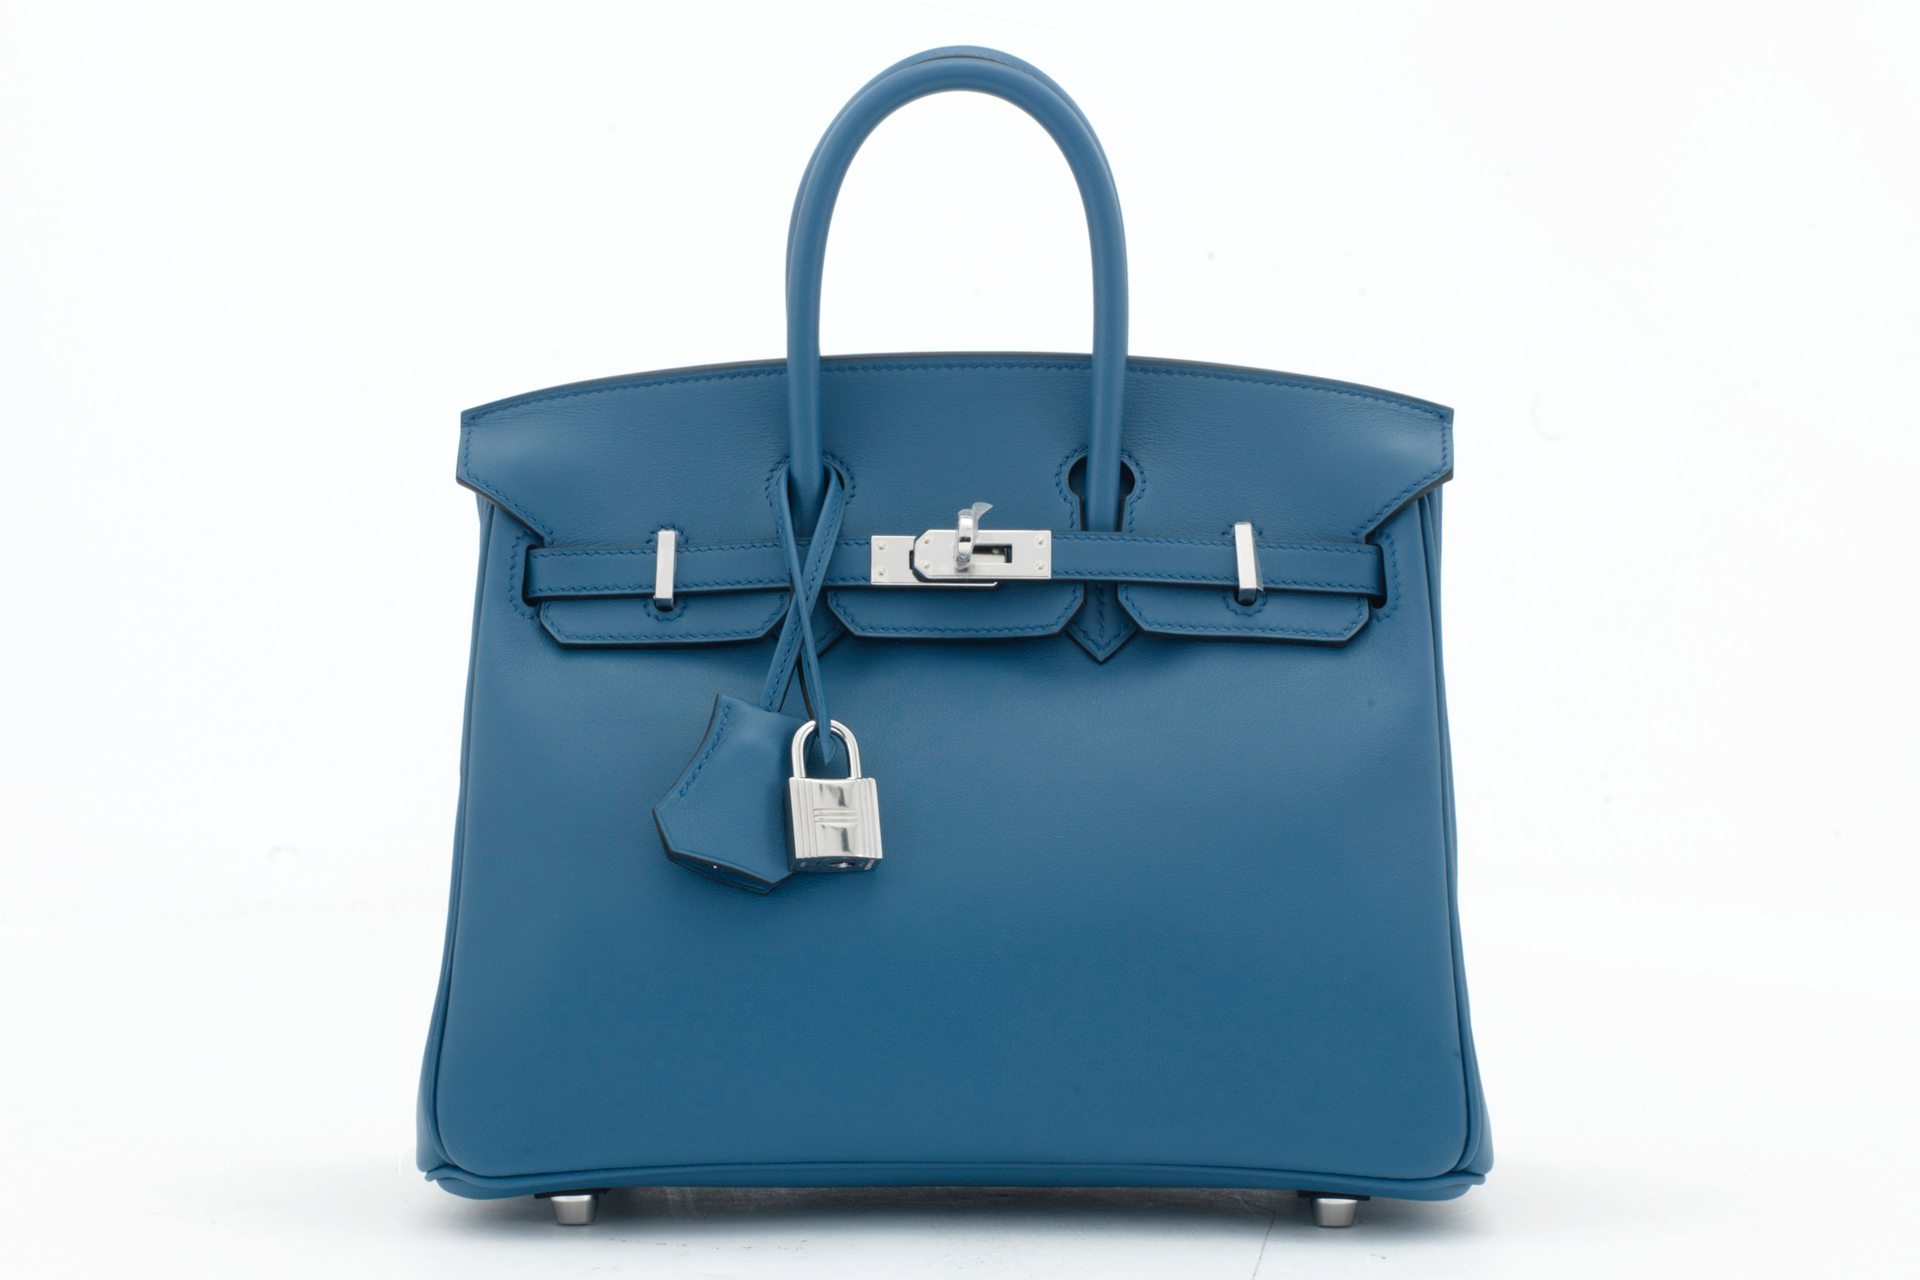 Hermès Handbags: Guide to Buying a Birkin or Kelly Hermès Bag 2017